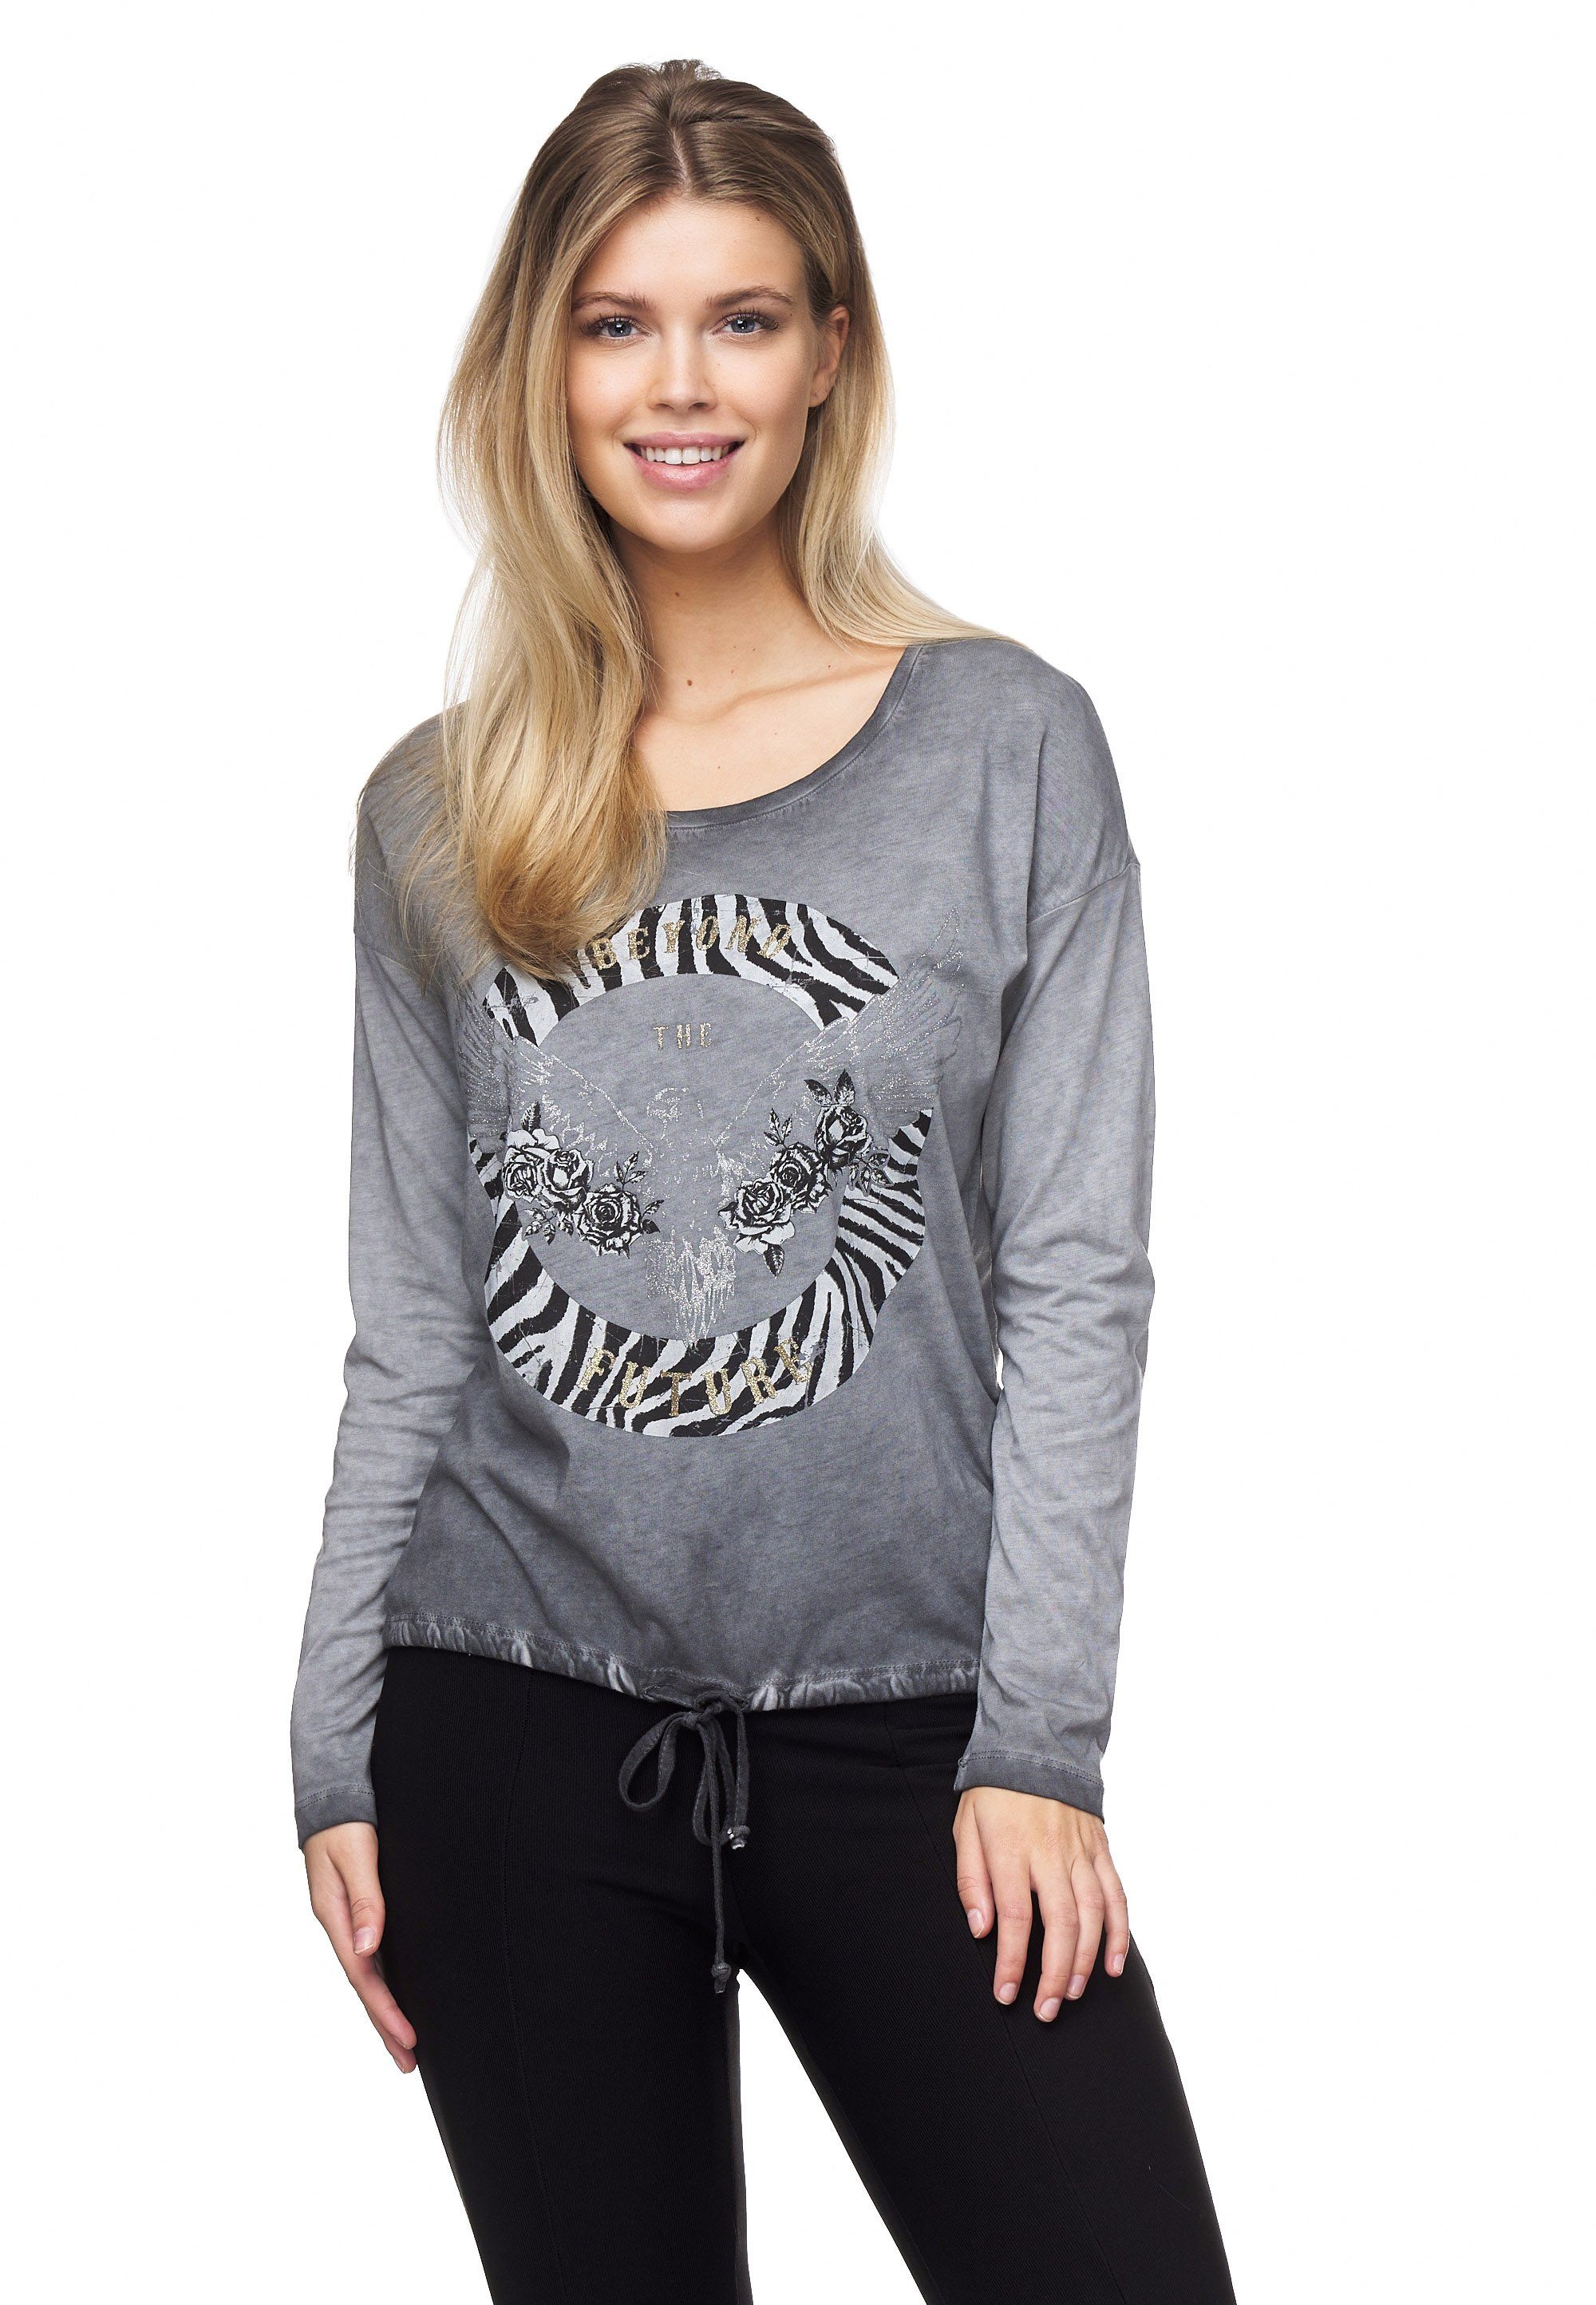 Decay Langarmshirt mit Decay Trendiges Animalprint, der Marke Langarmshirt für Damen tollem